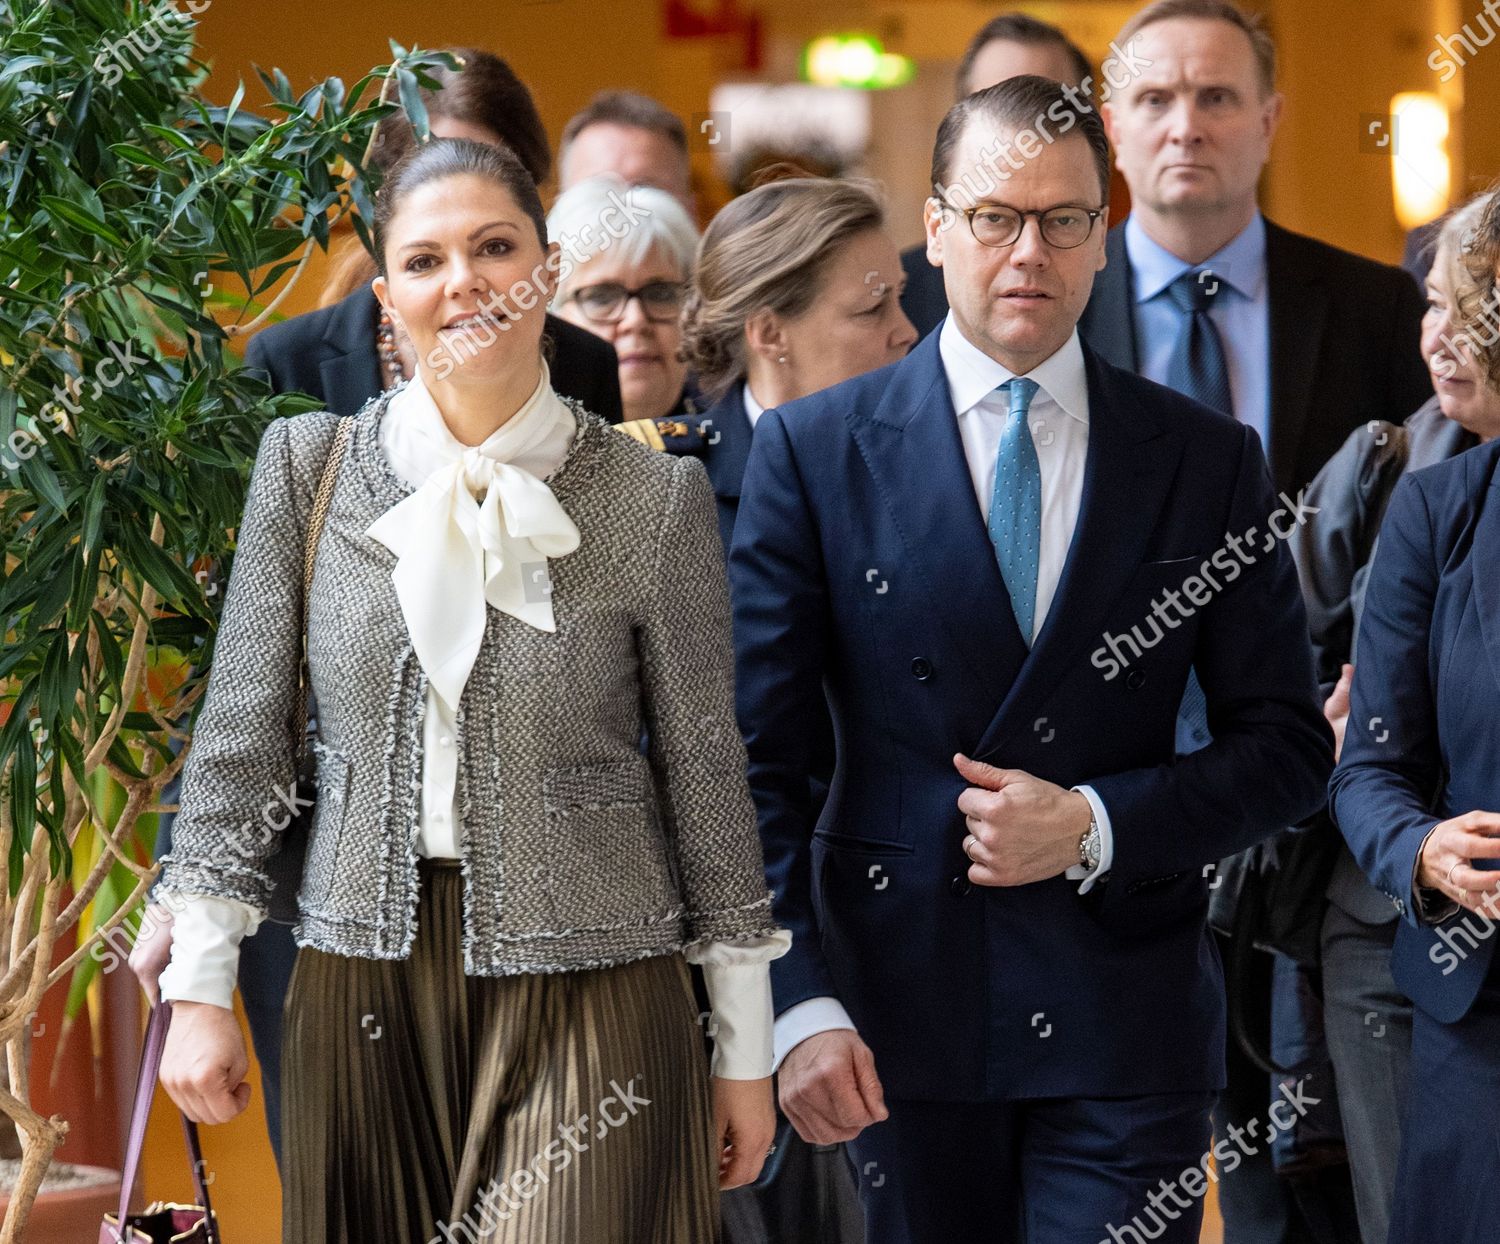 swedish-royals-visit-to-lund-sweden-shutterstock-editorial-10543473i.jpg